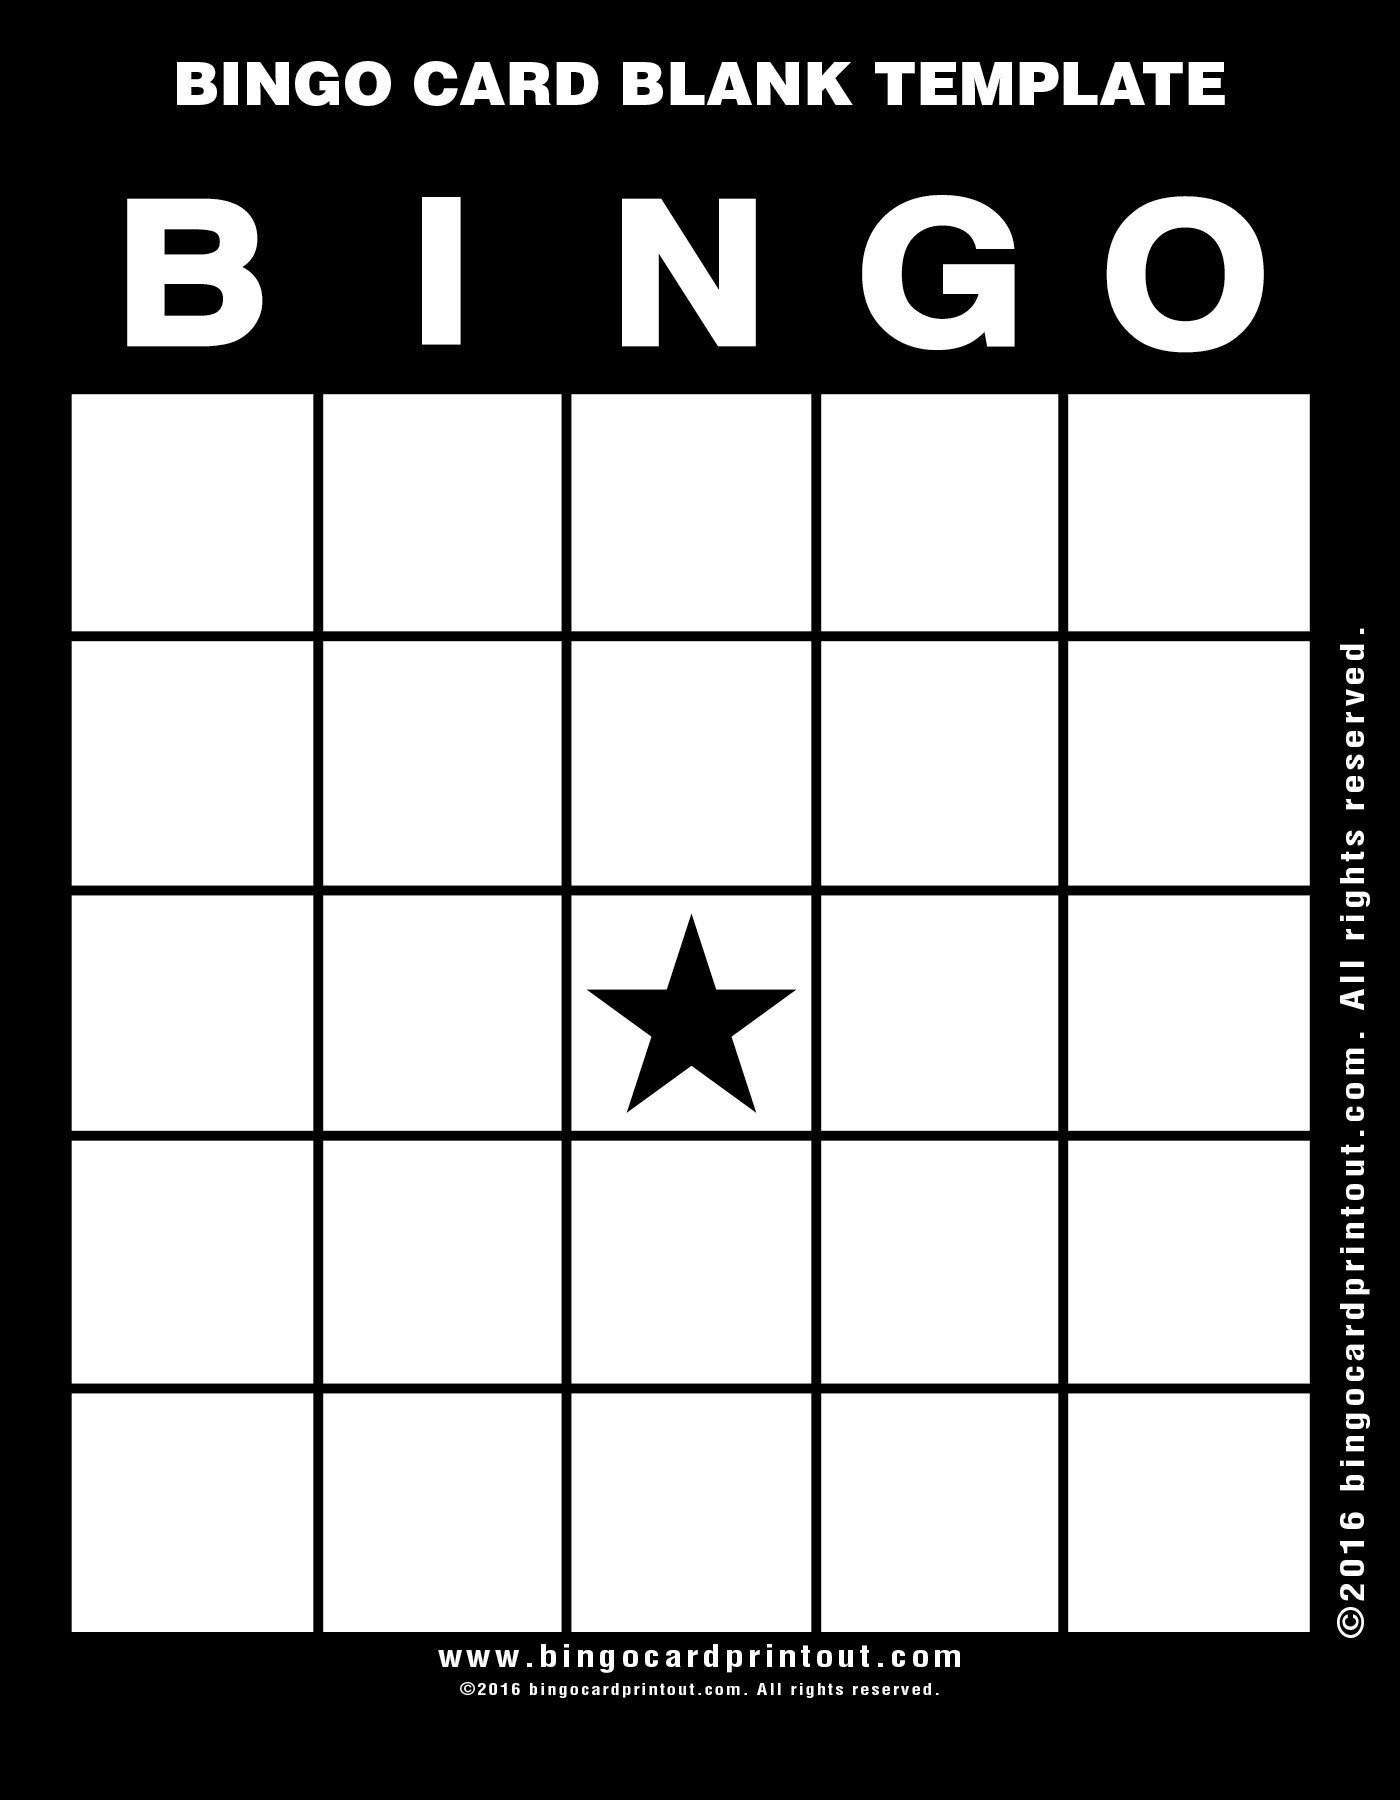 Free Bingo Card Template Bingo Card Blank Template Bingocardprintout